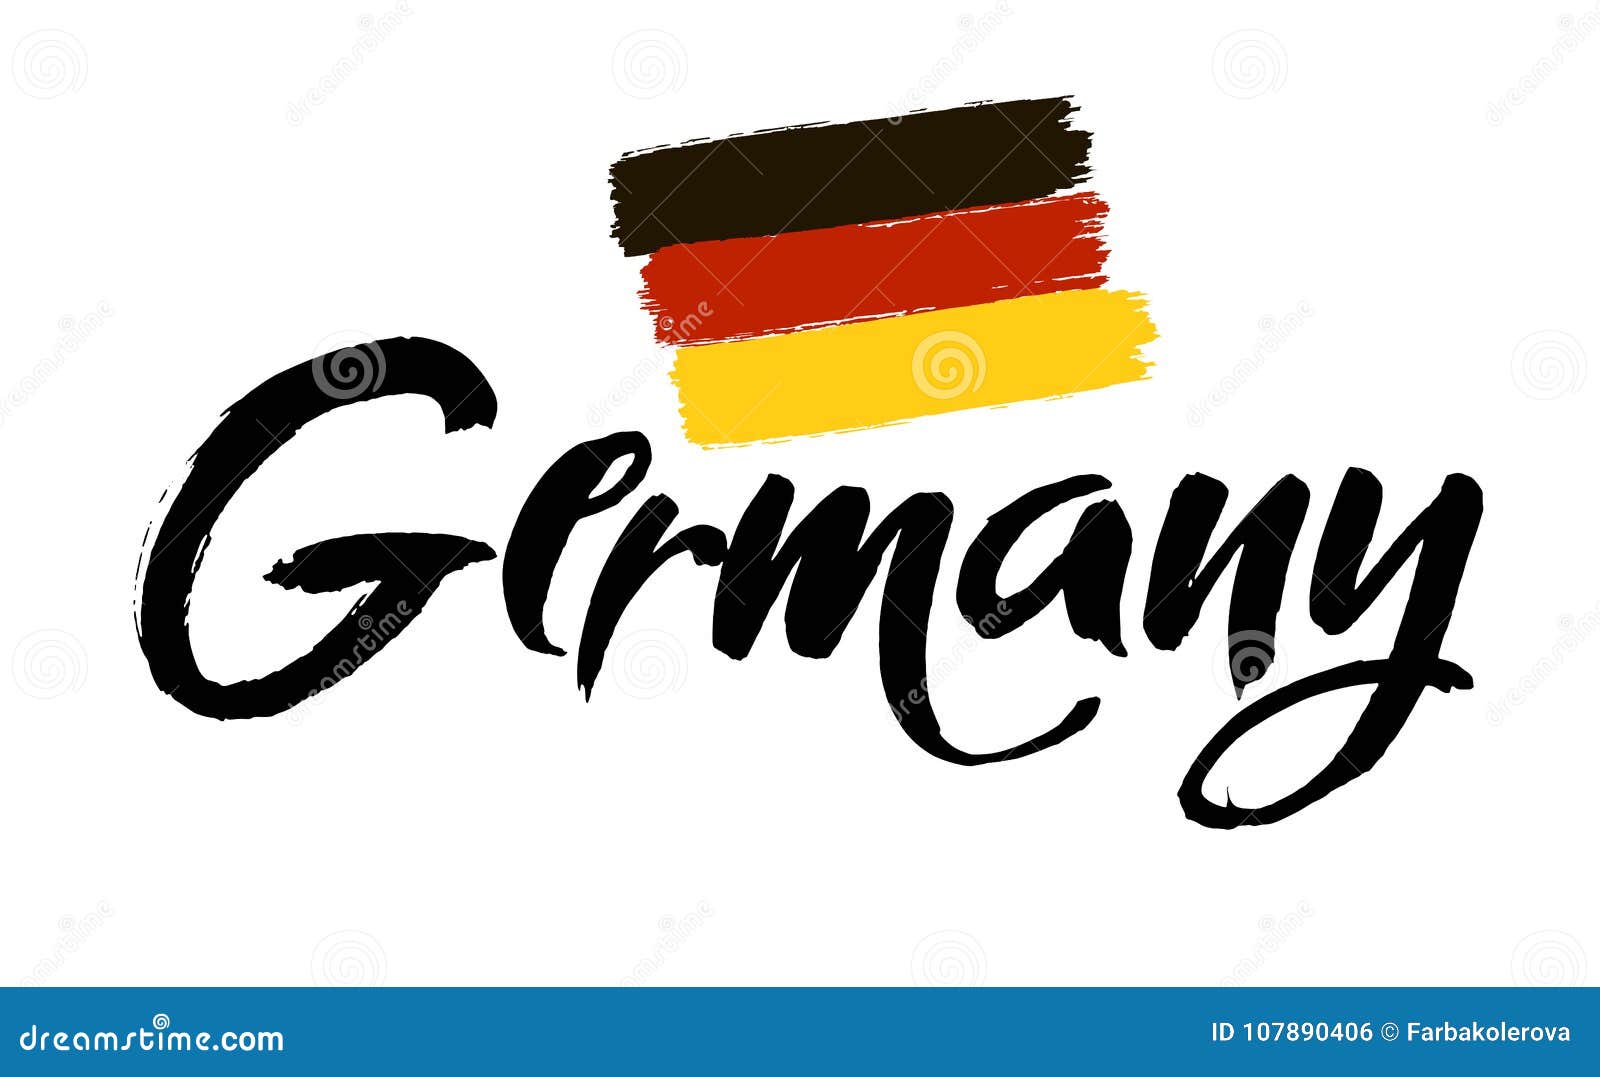 german font microsoft word